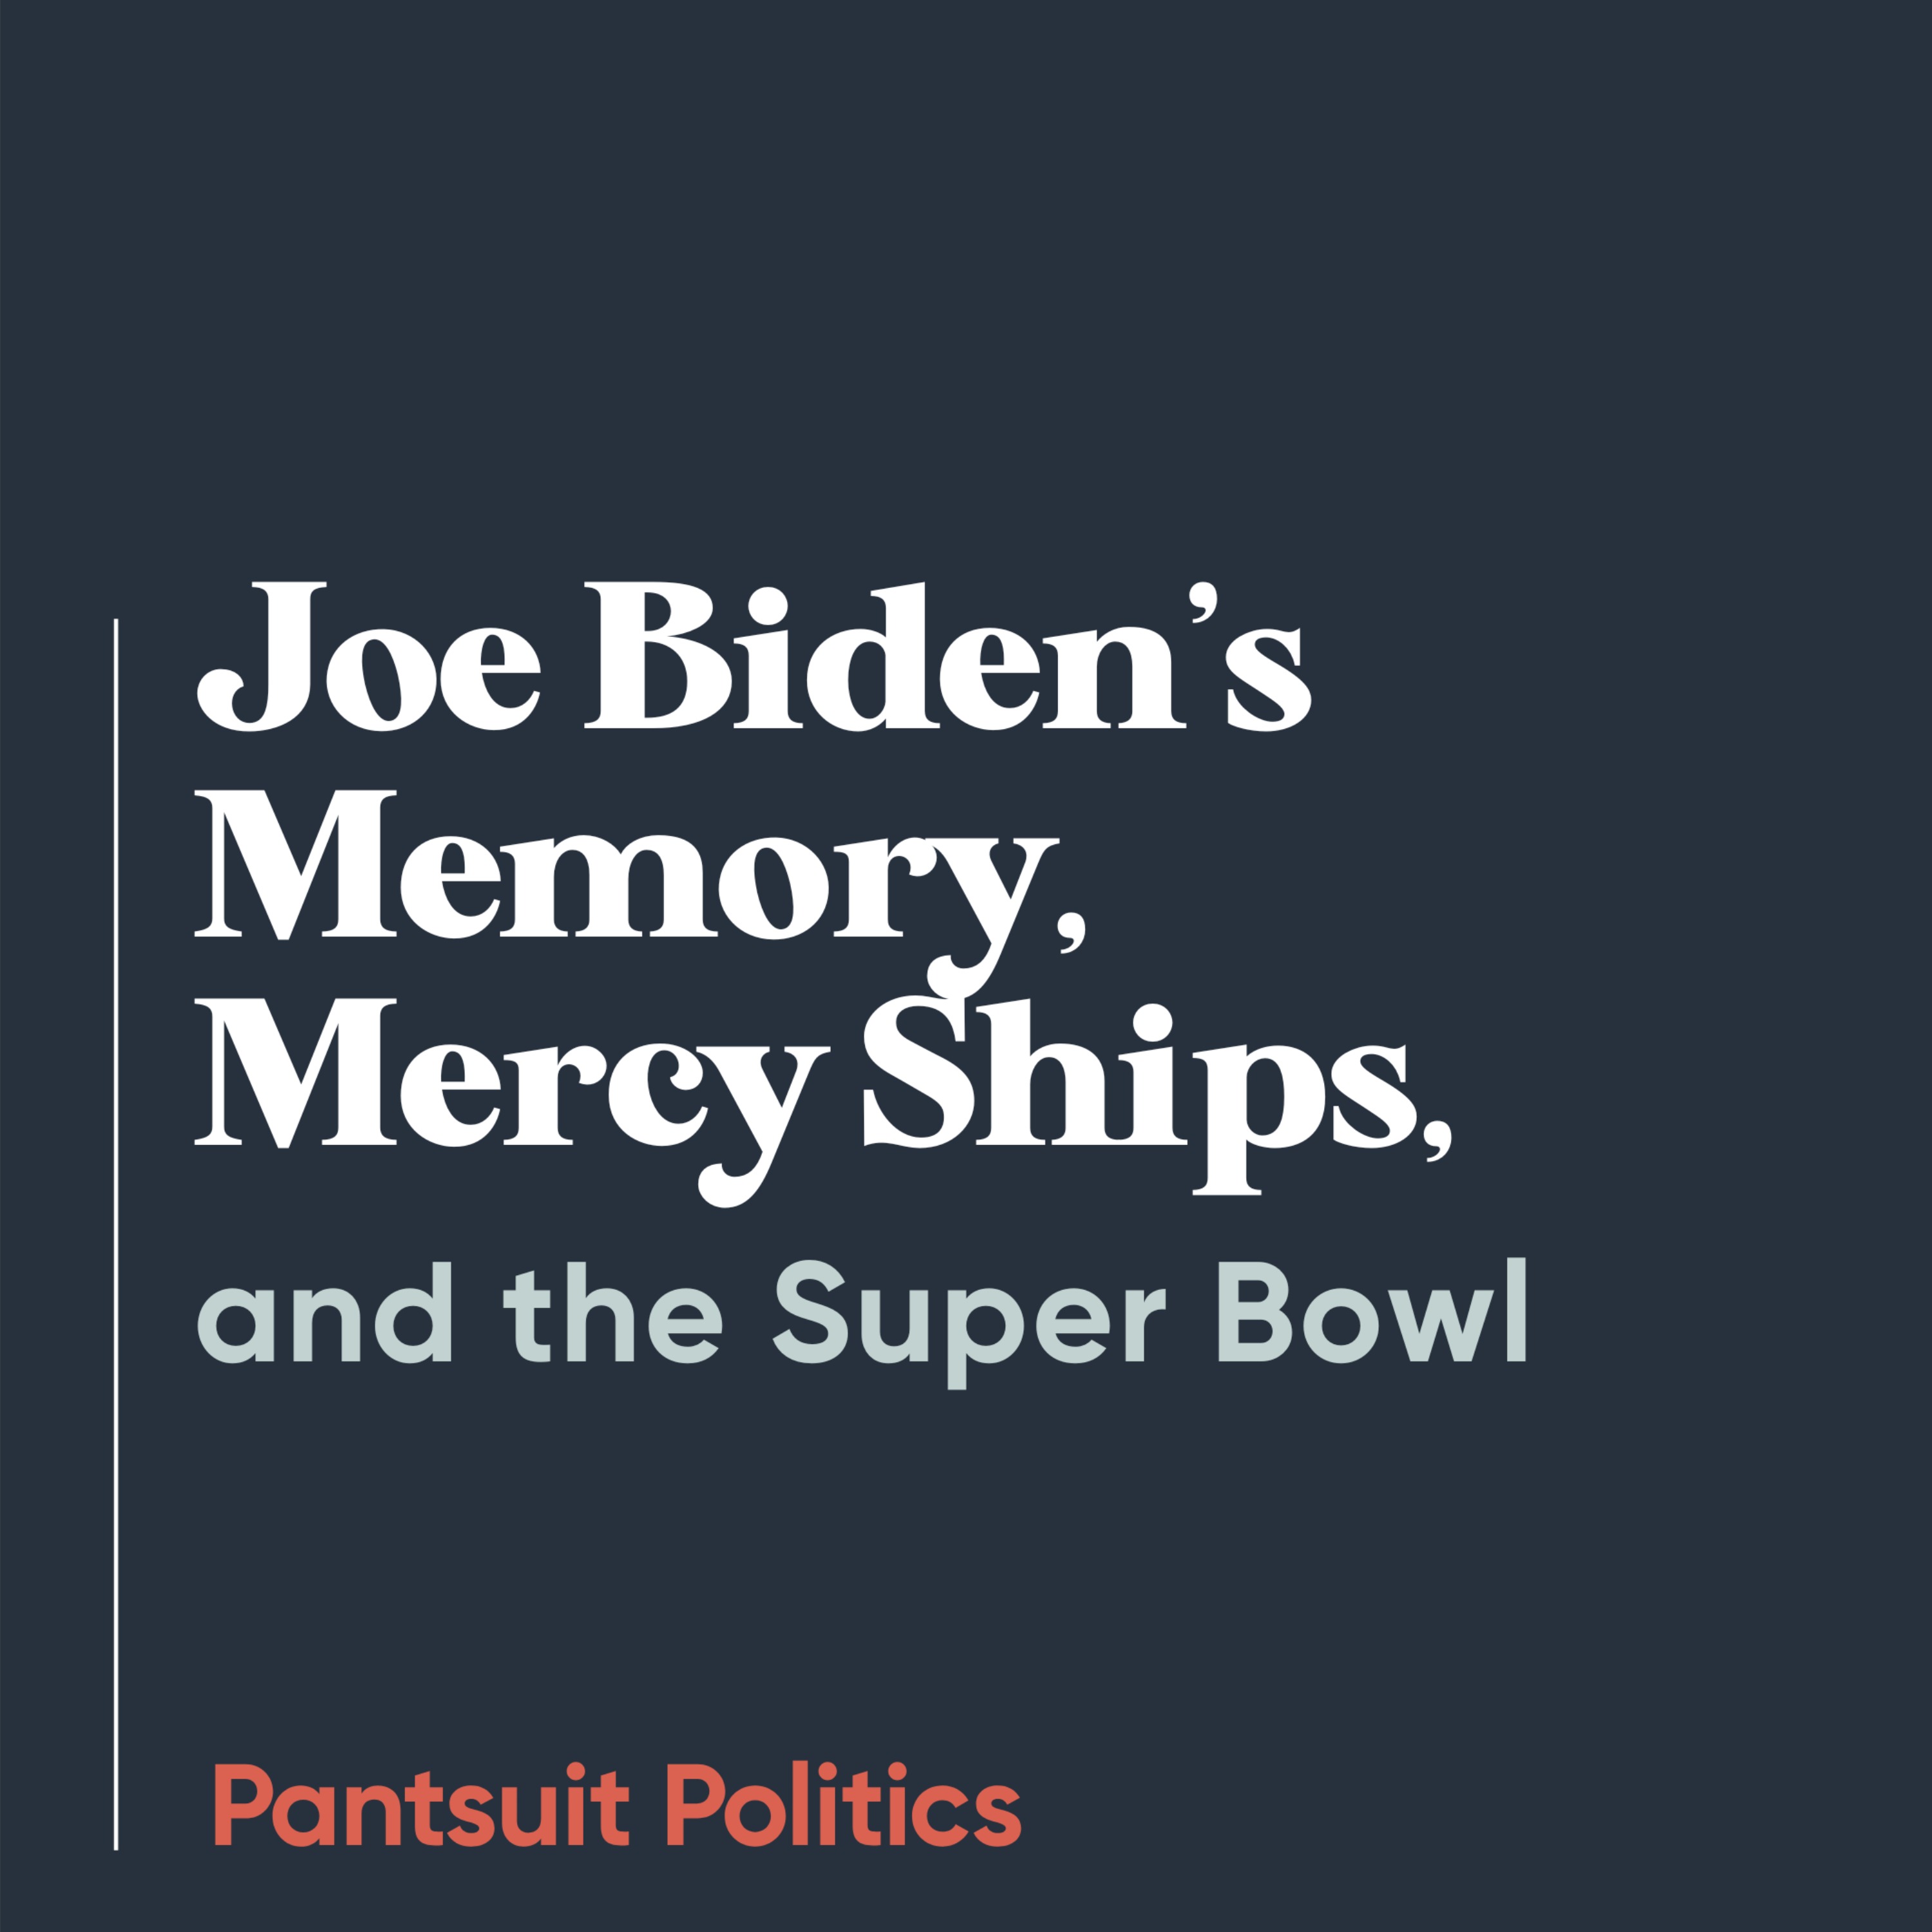 Joe Biden’s Memory, Mercy Ships, and the Super Bowl